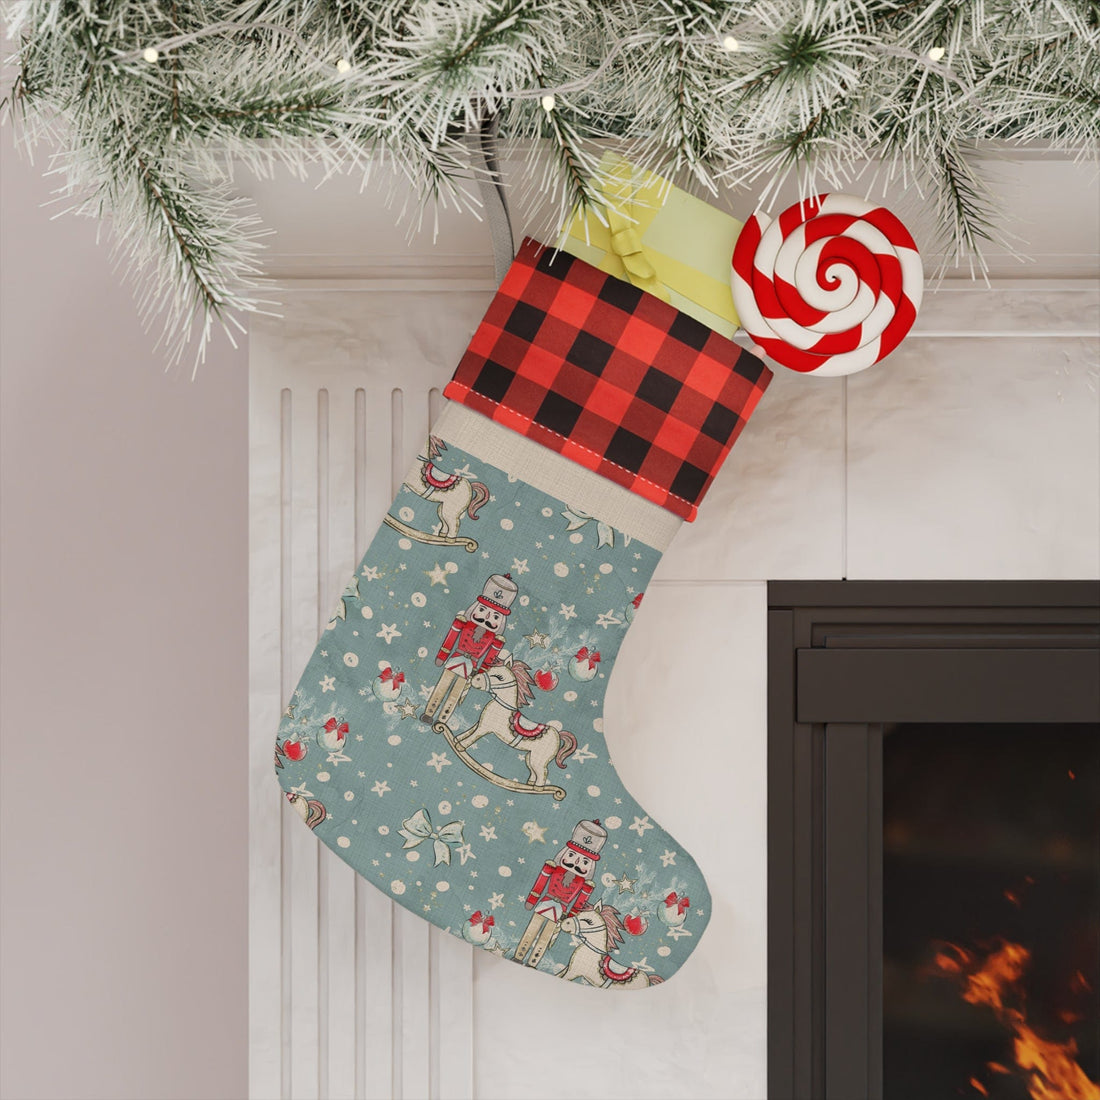 Kate McEnroe New York Festive Nutcracker Christmas Stocking: Plaid Top, Burlap Linen Boot, Spacious - Perfect Holiday Decor, Gift for KidsHoliday Stockings24437937388702256679